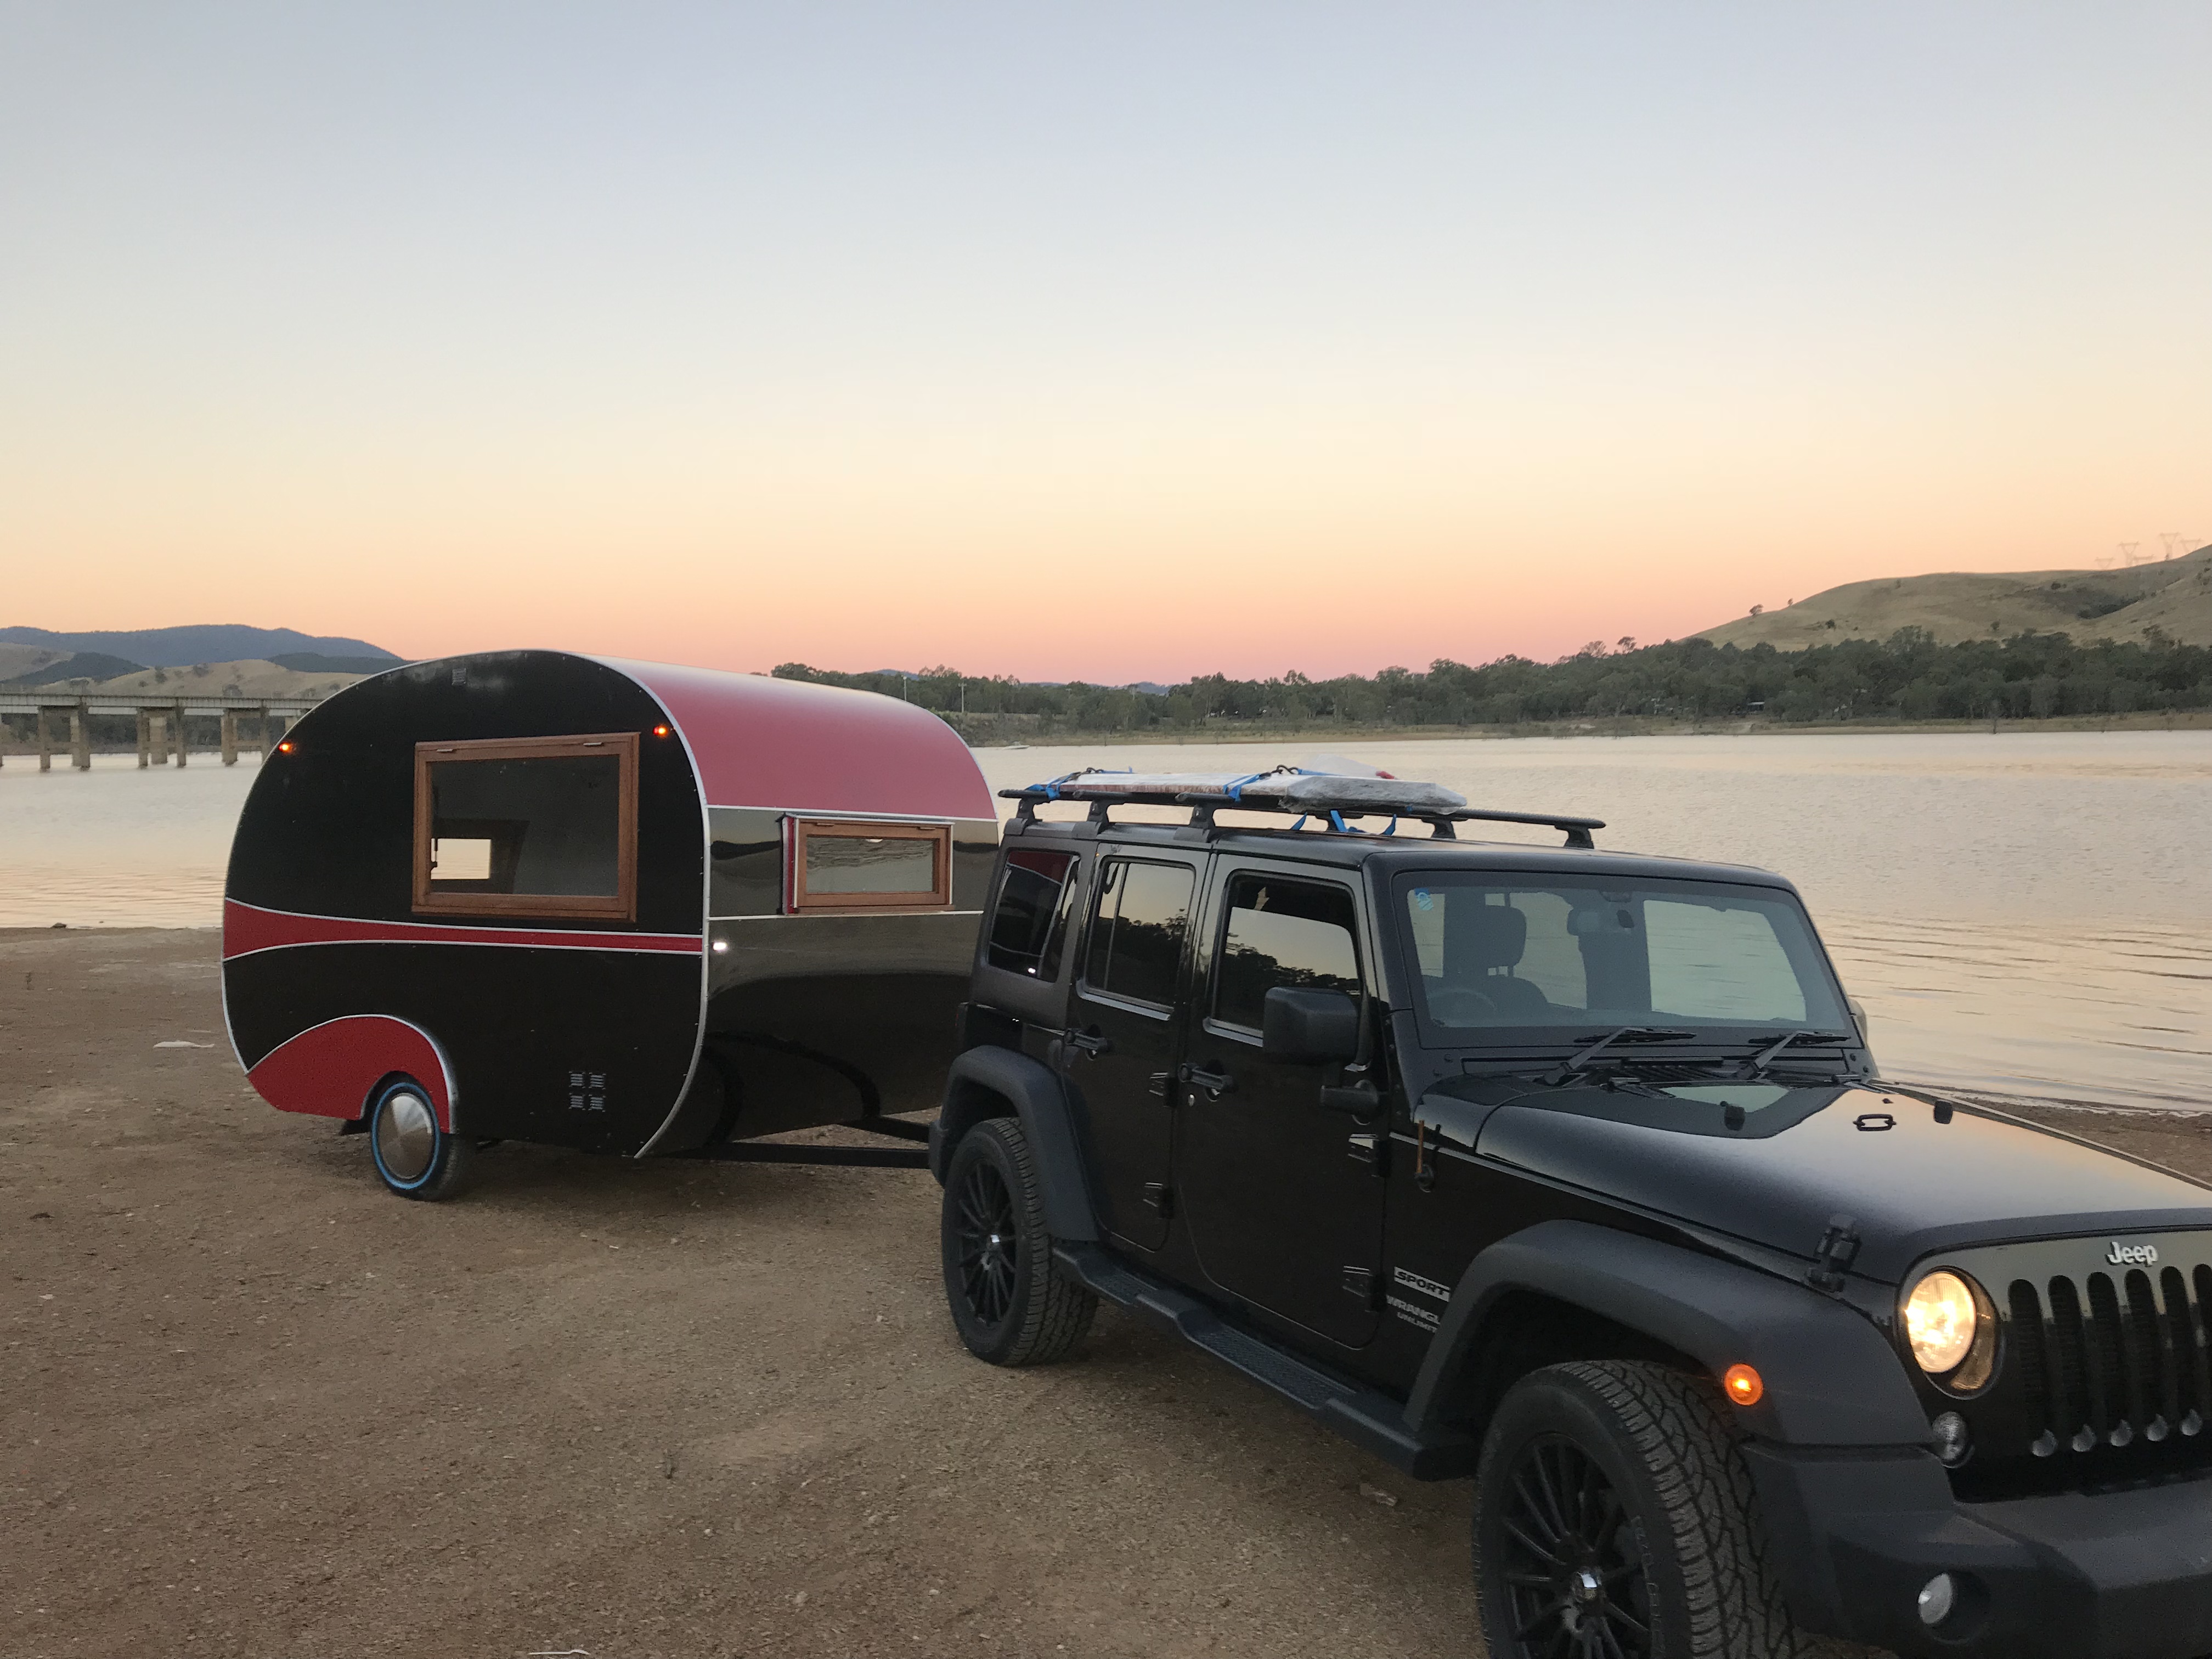 camper caravan for sale